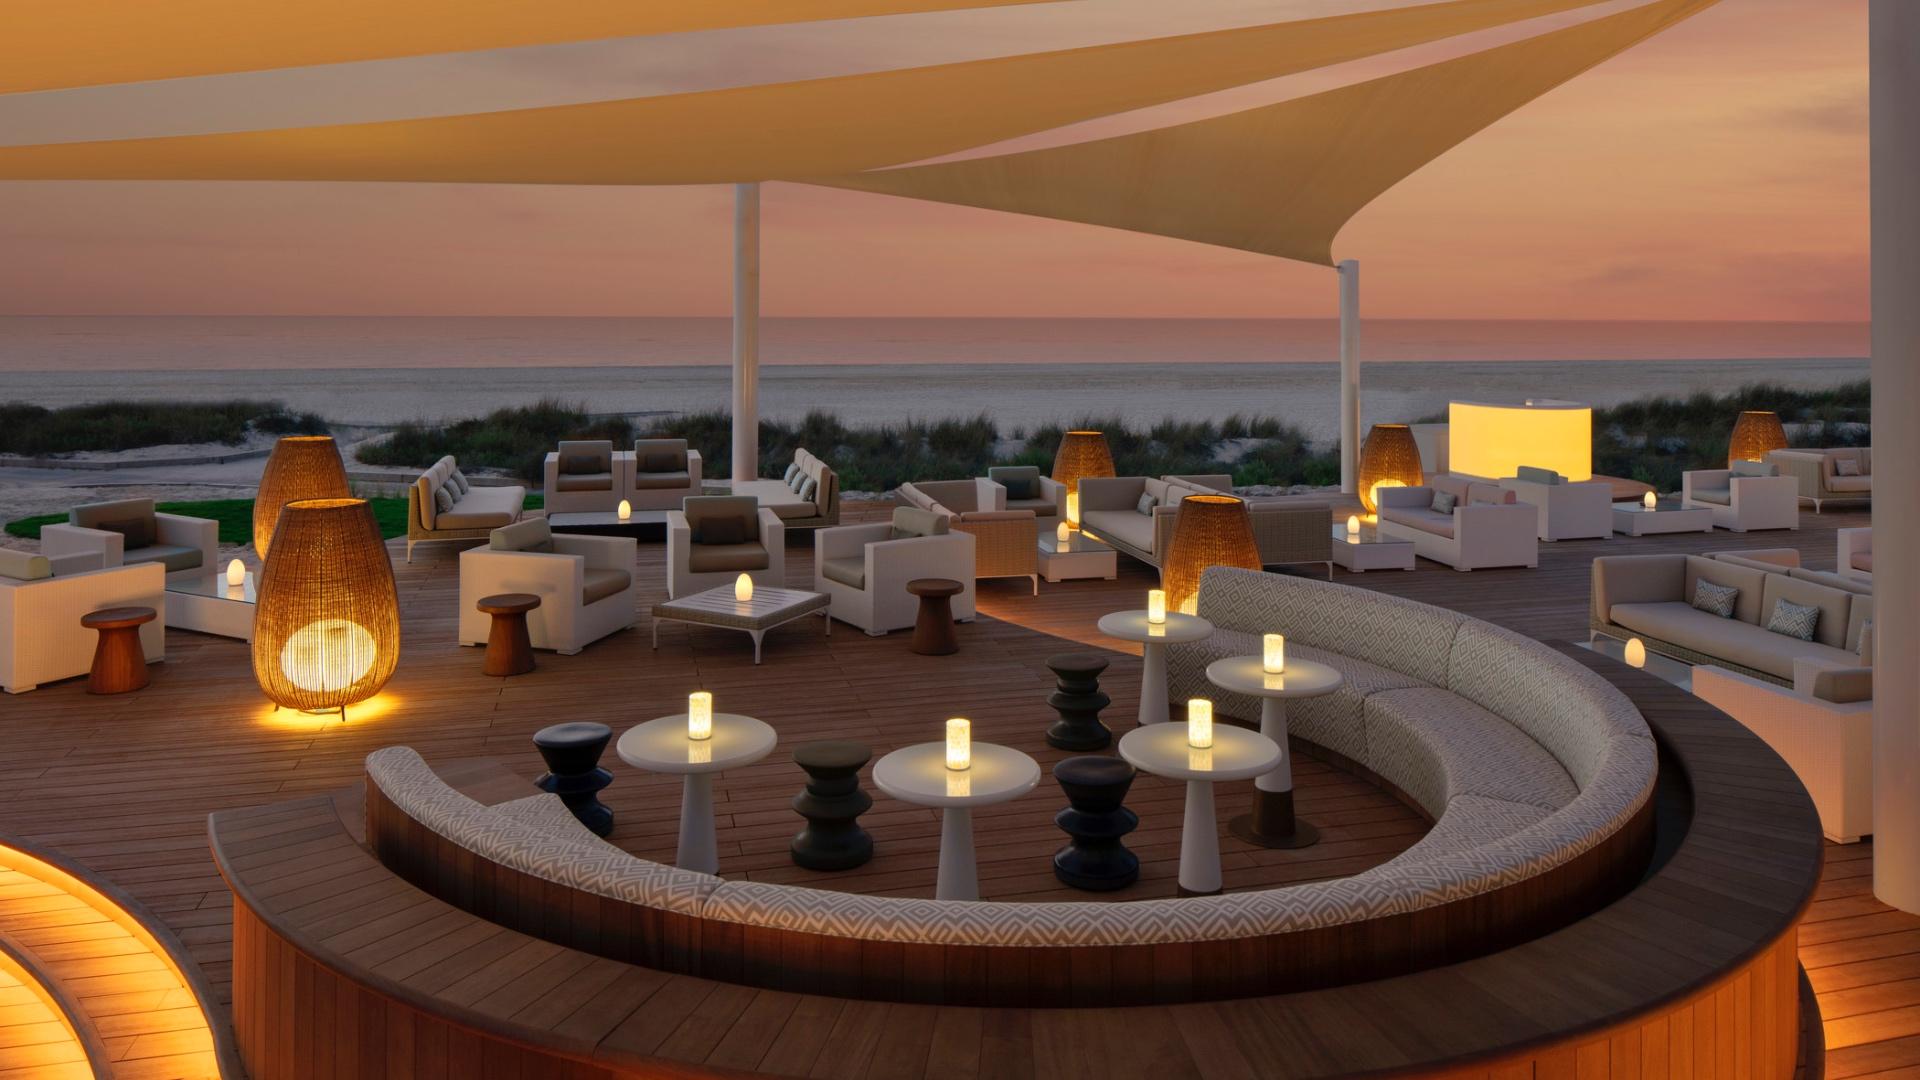 The St. Regis Saadiyat Island Resort, Abu Dhabi